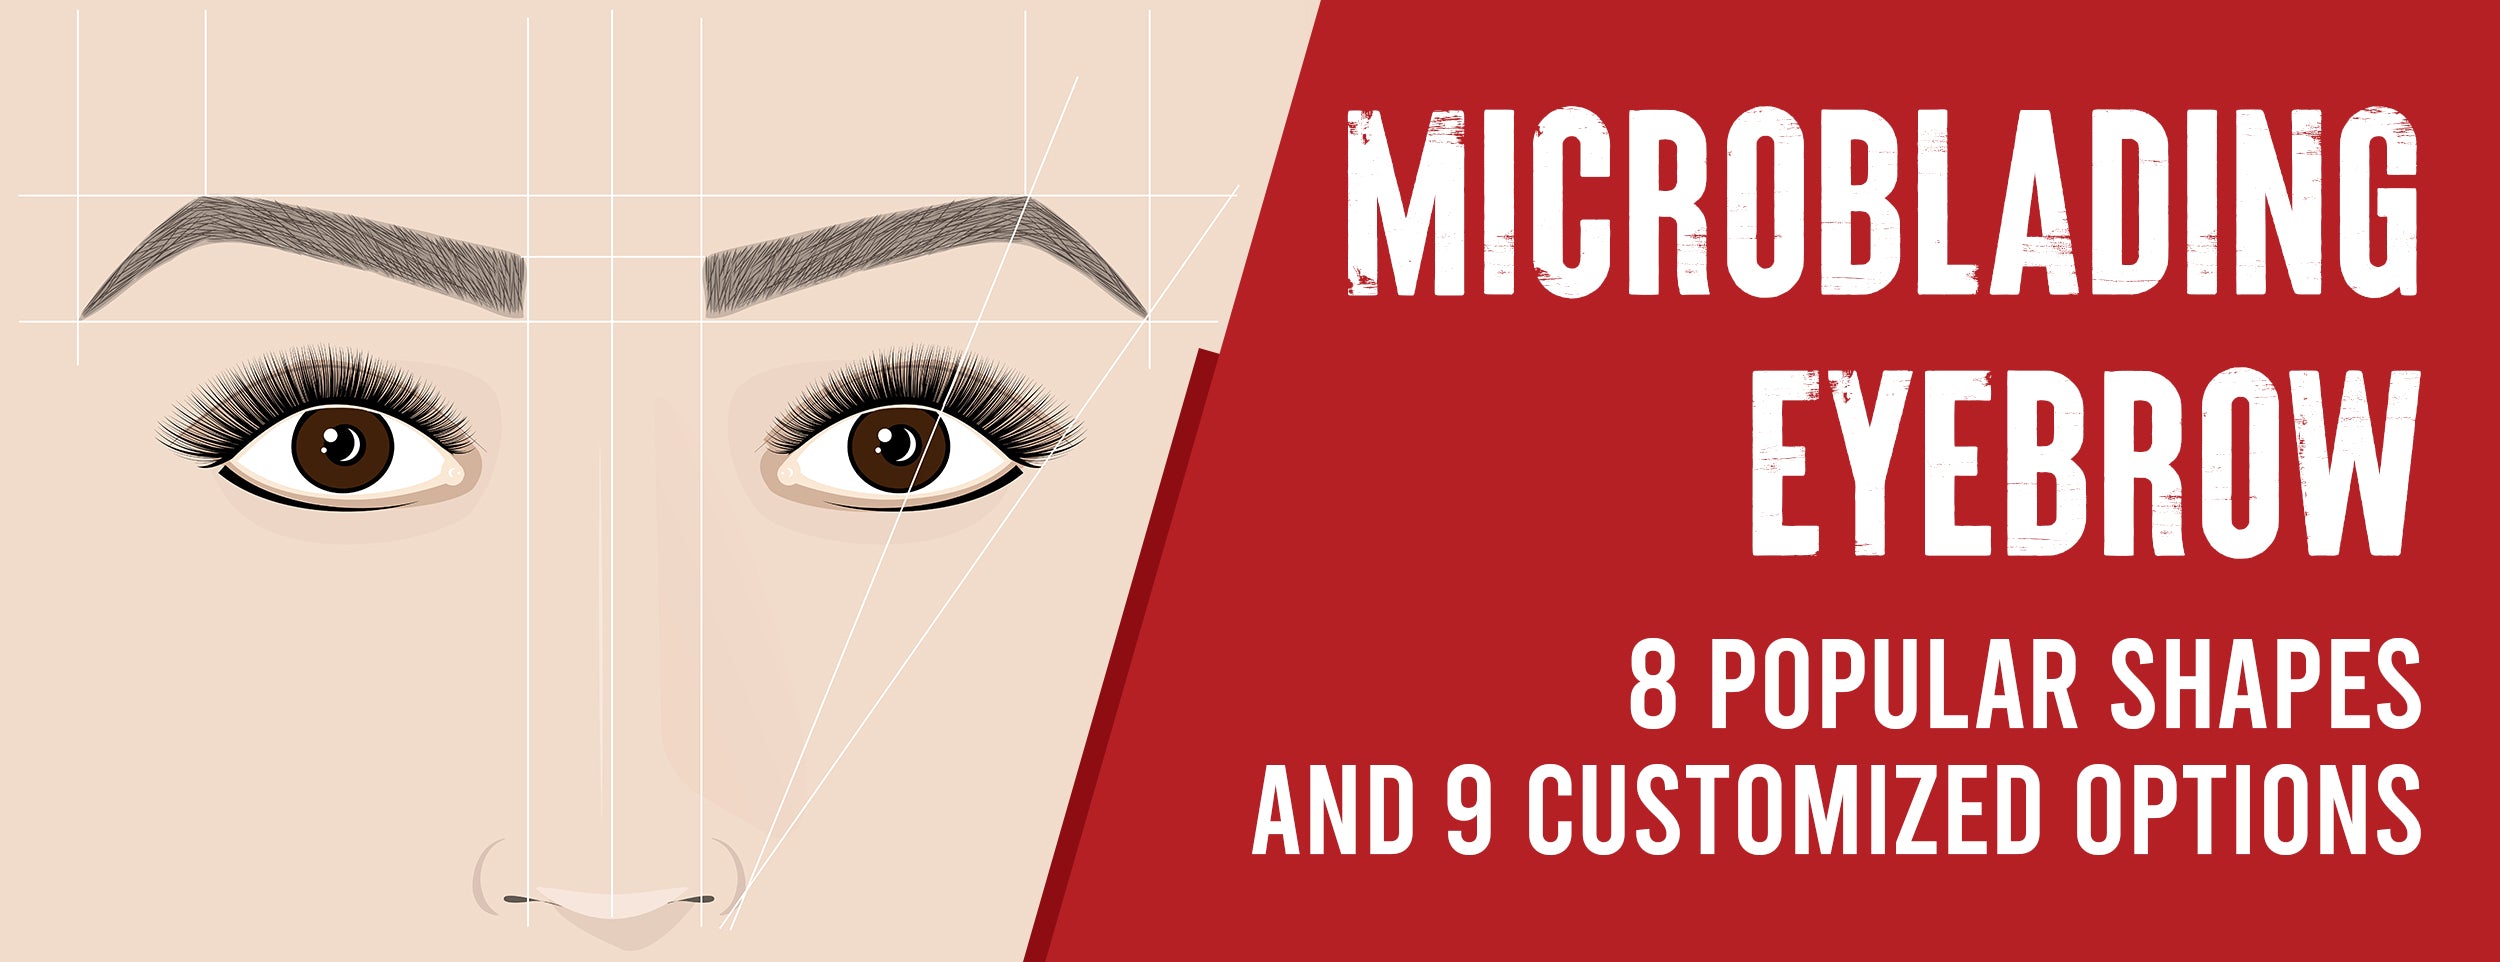 Customized Eyebrow Microblading Options